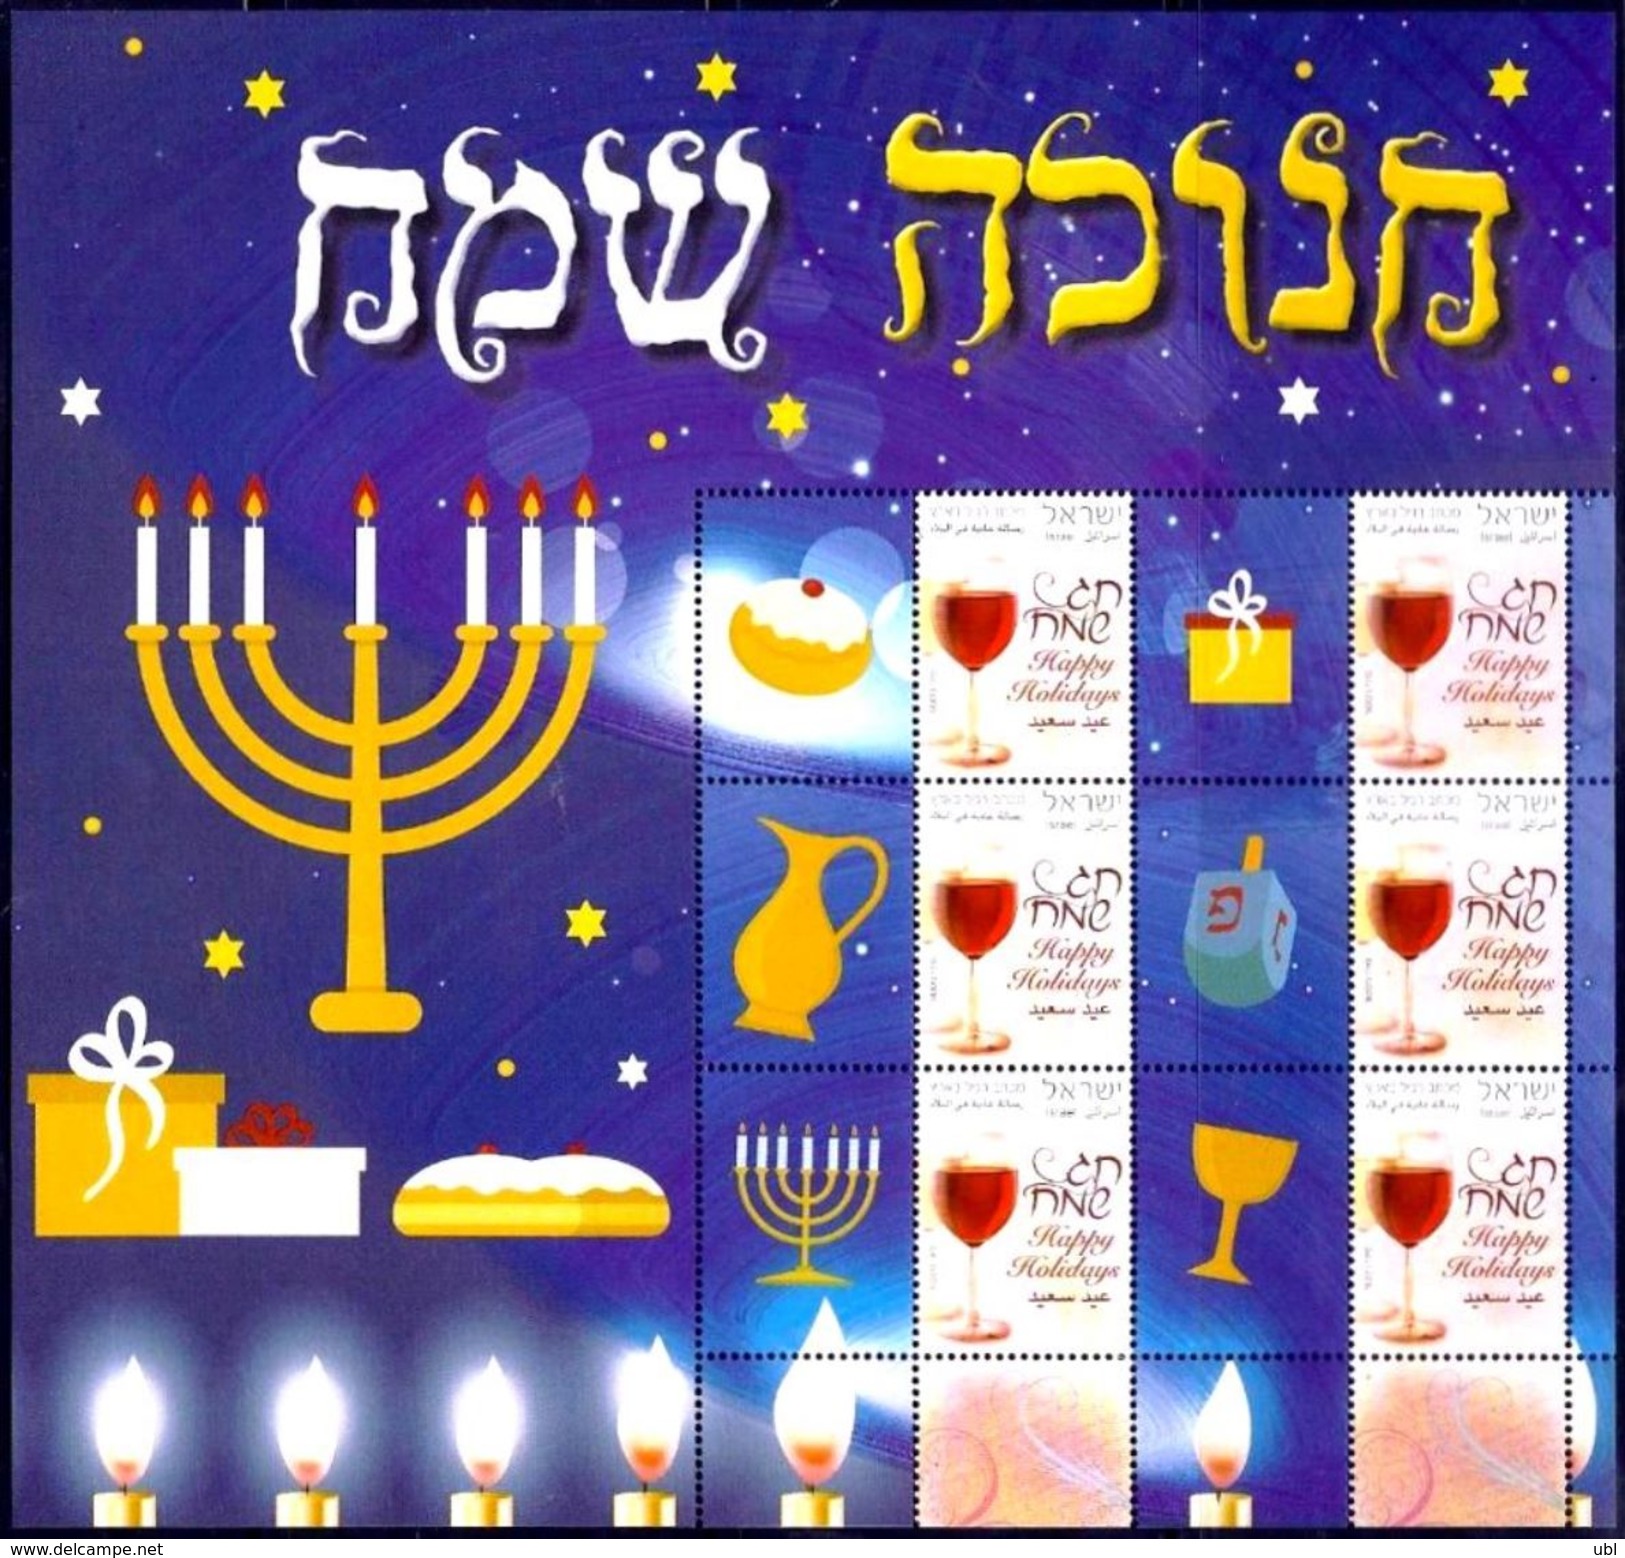 ISRAEL 2017 - The Hanukkah Festivals - Generic Sheet - MNH - Jewish